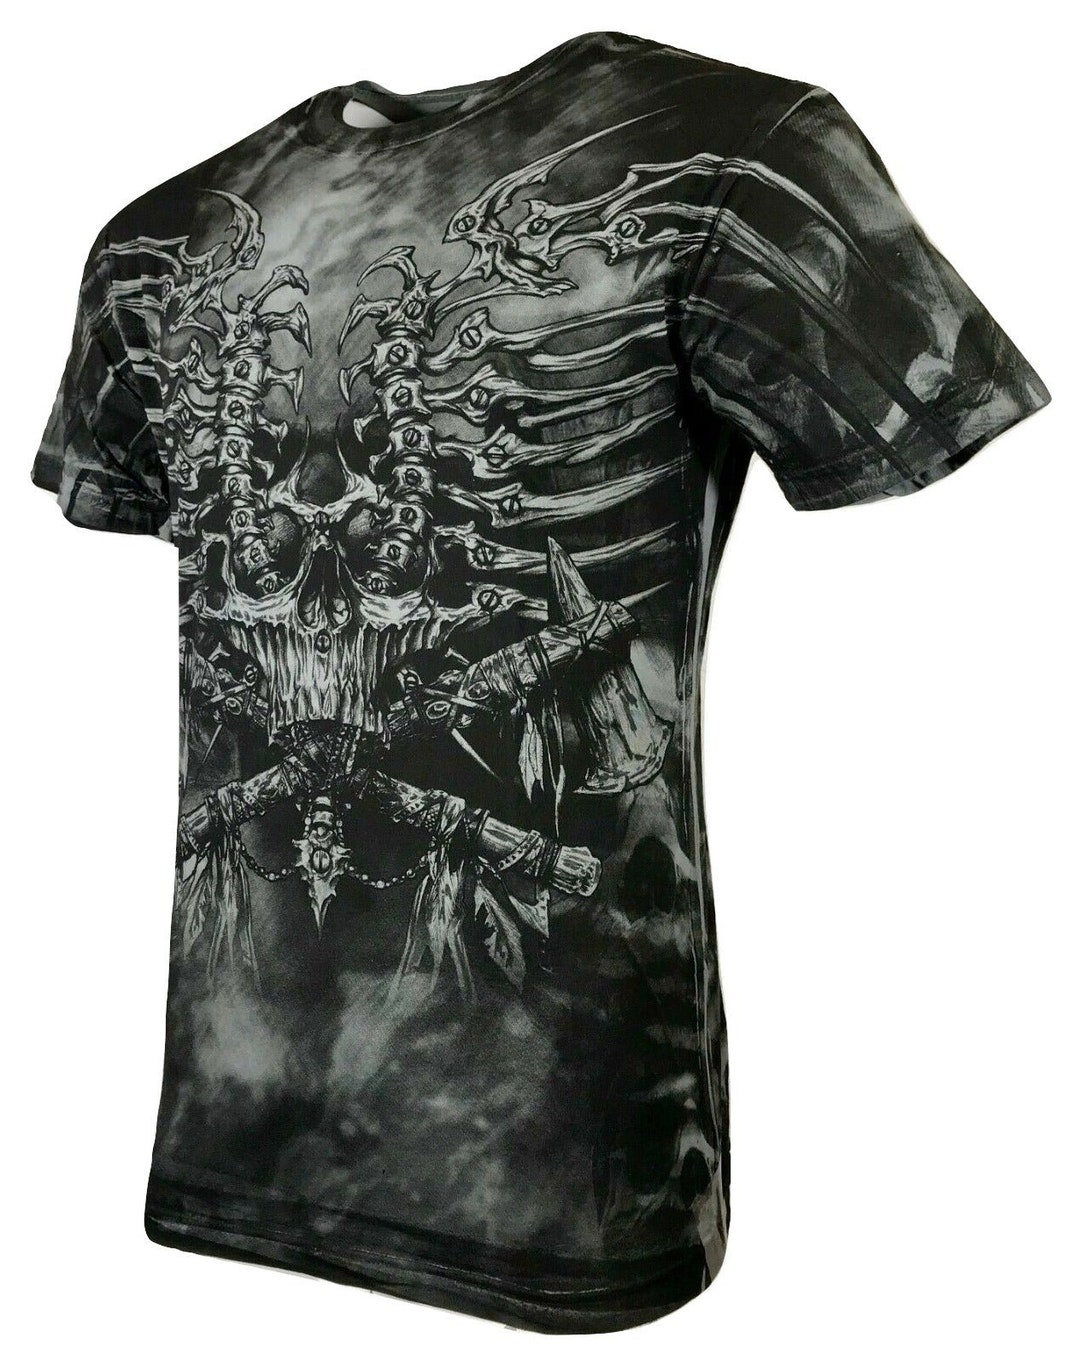 XTREME COUTURE by AFFLICTION Men T-shirt Iron Bones Skulls